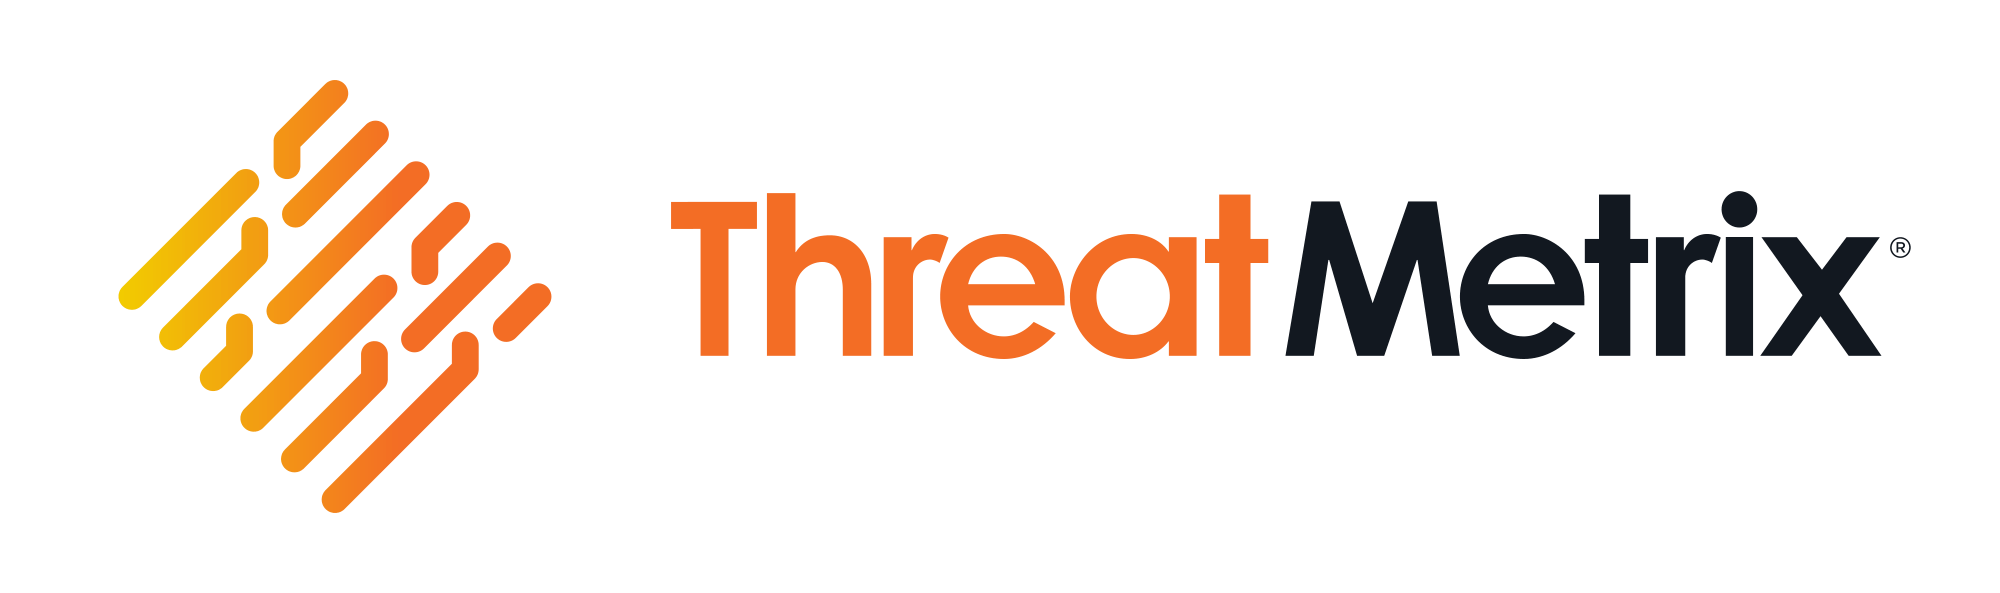 ThreatMetrix Logo - Companies that are using ThreatMetrix Fraud Prevention Software